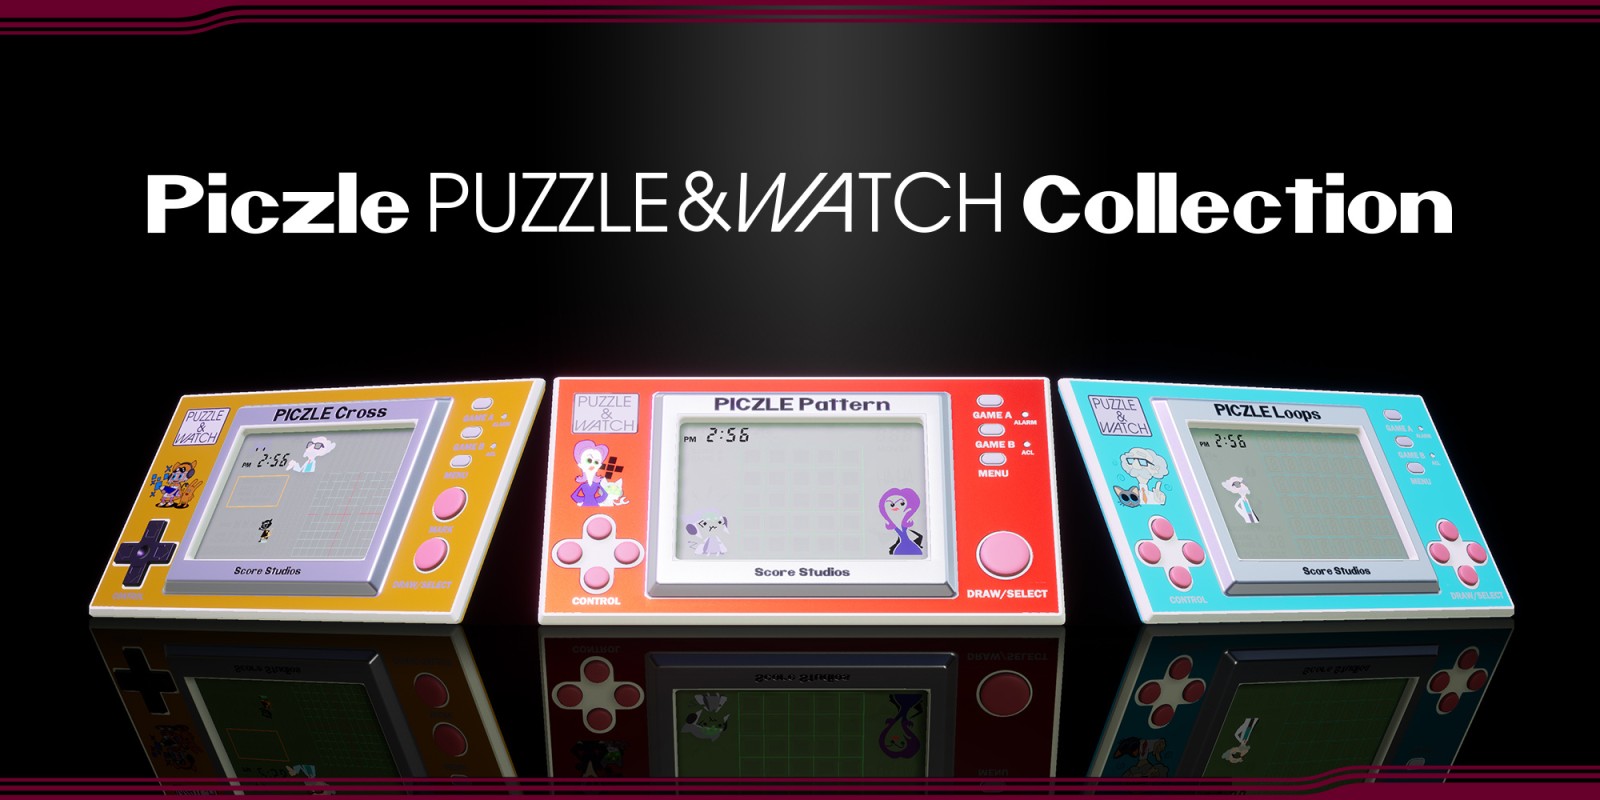 Piczle Puzzle & Watch Collection